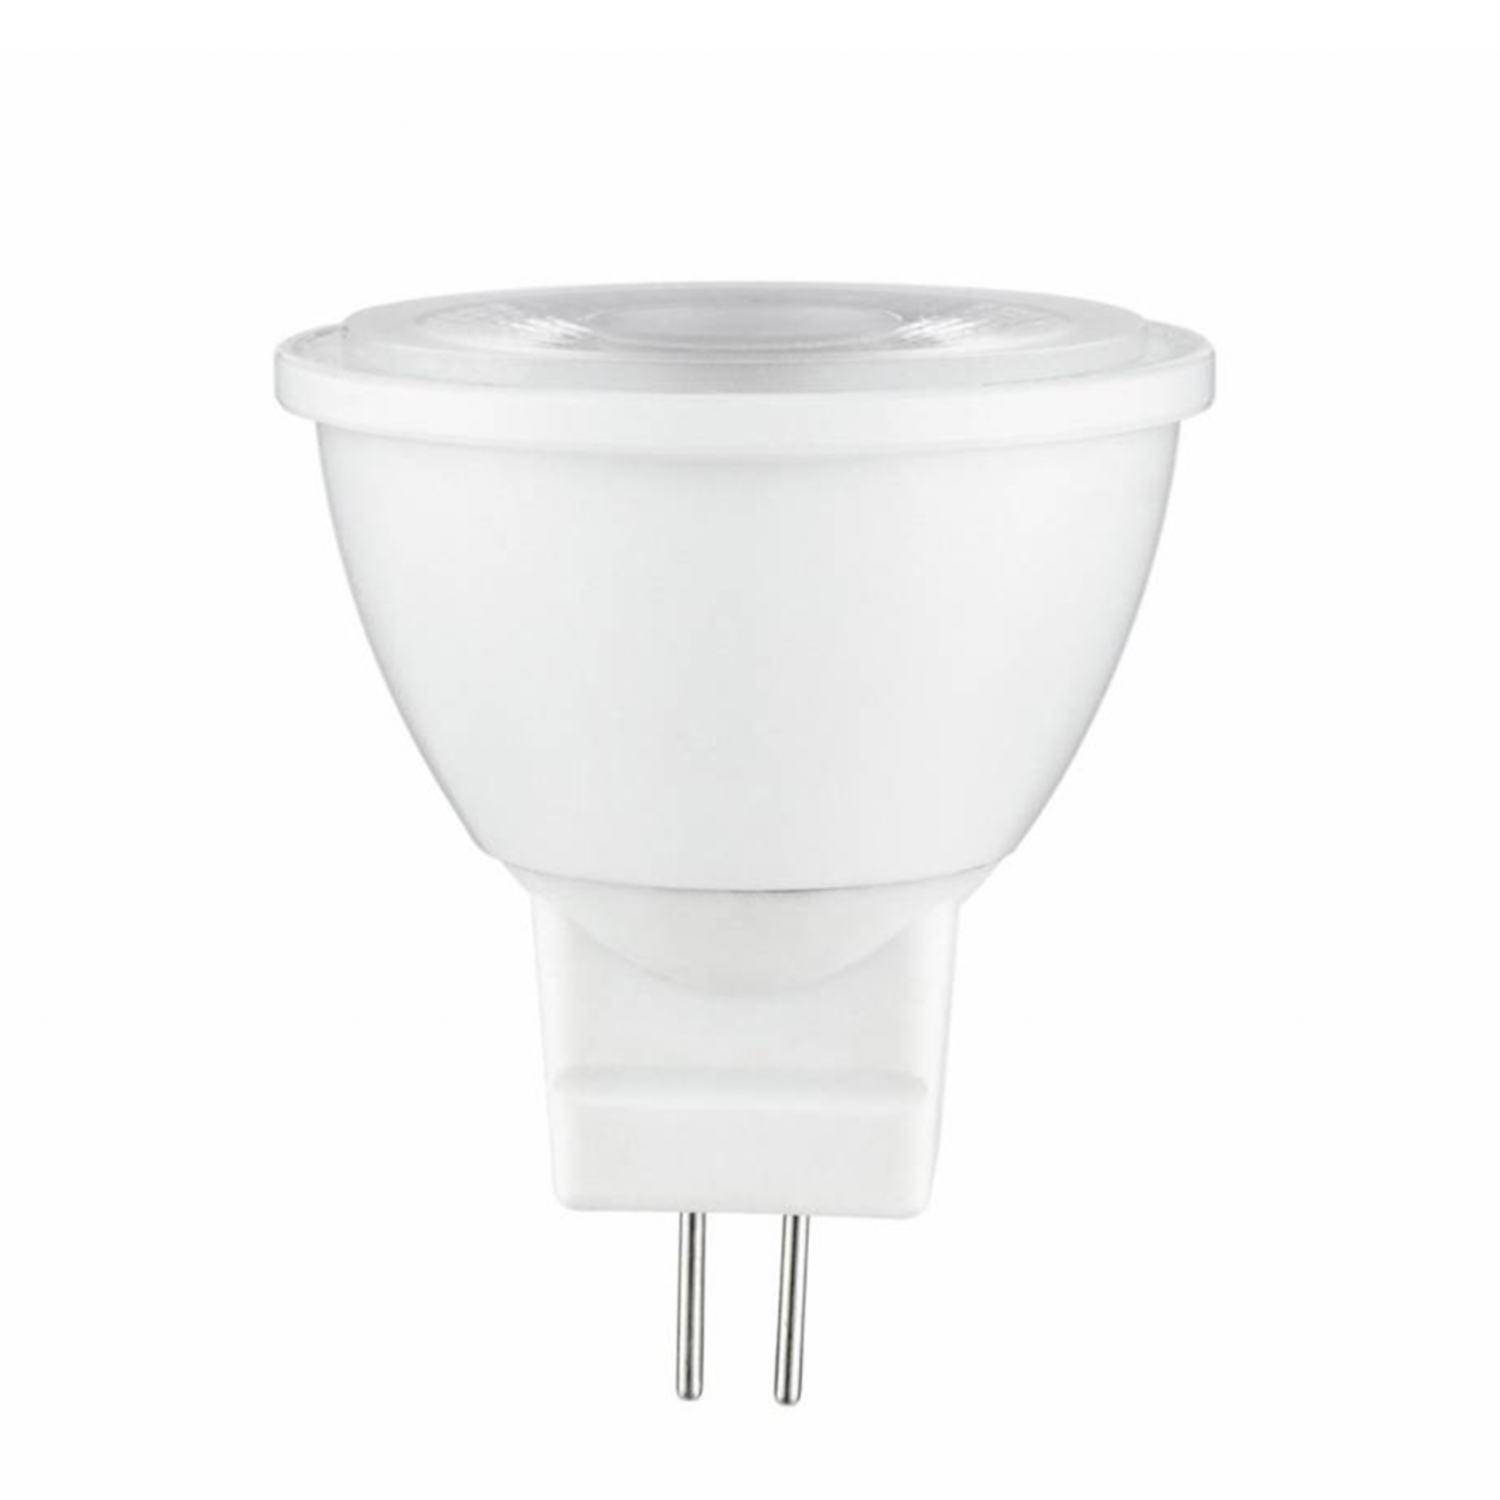 LED spot GU4 - MR11 LED 3W vervangt 25W - 2700K warm wit licht - Ledlichtdiscounter.nl